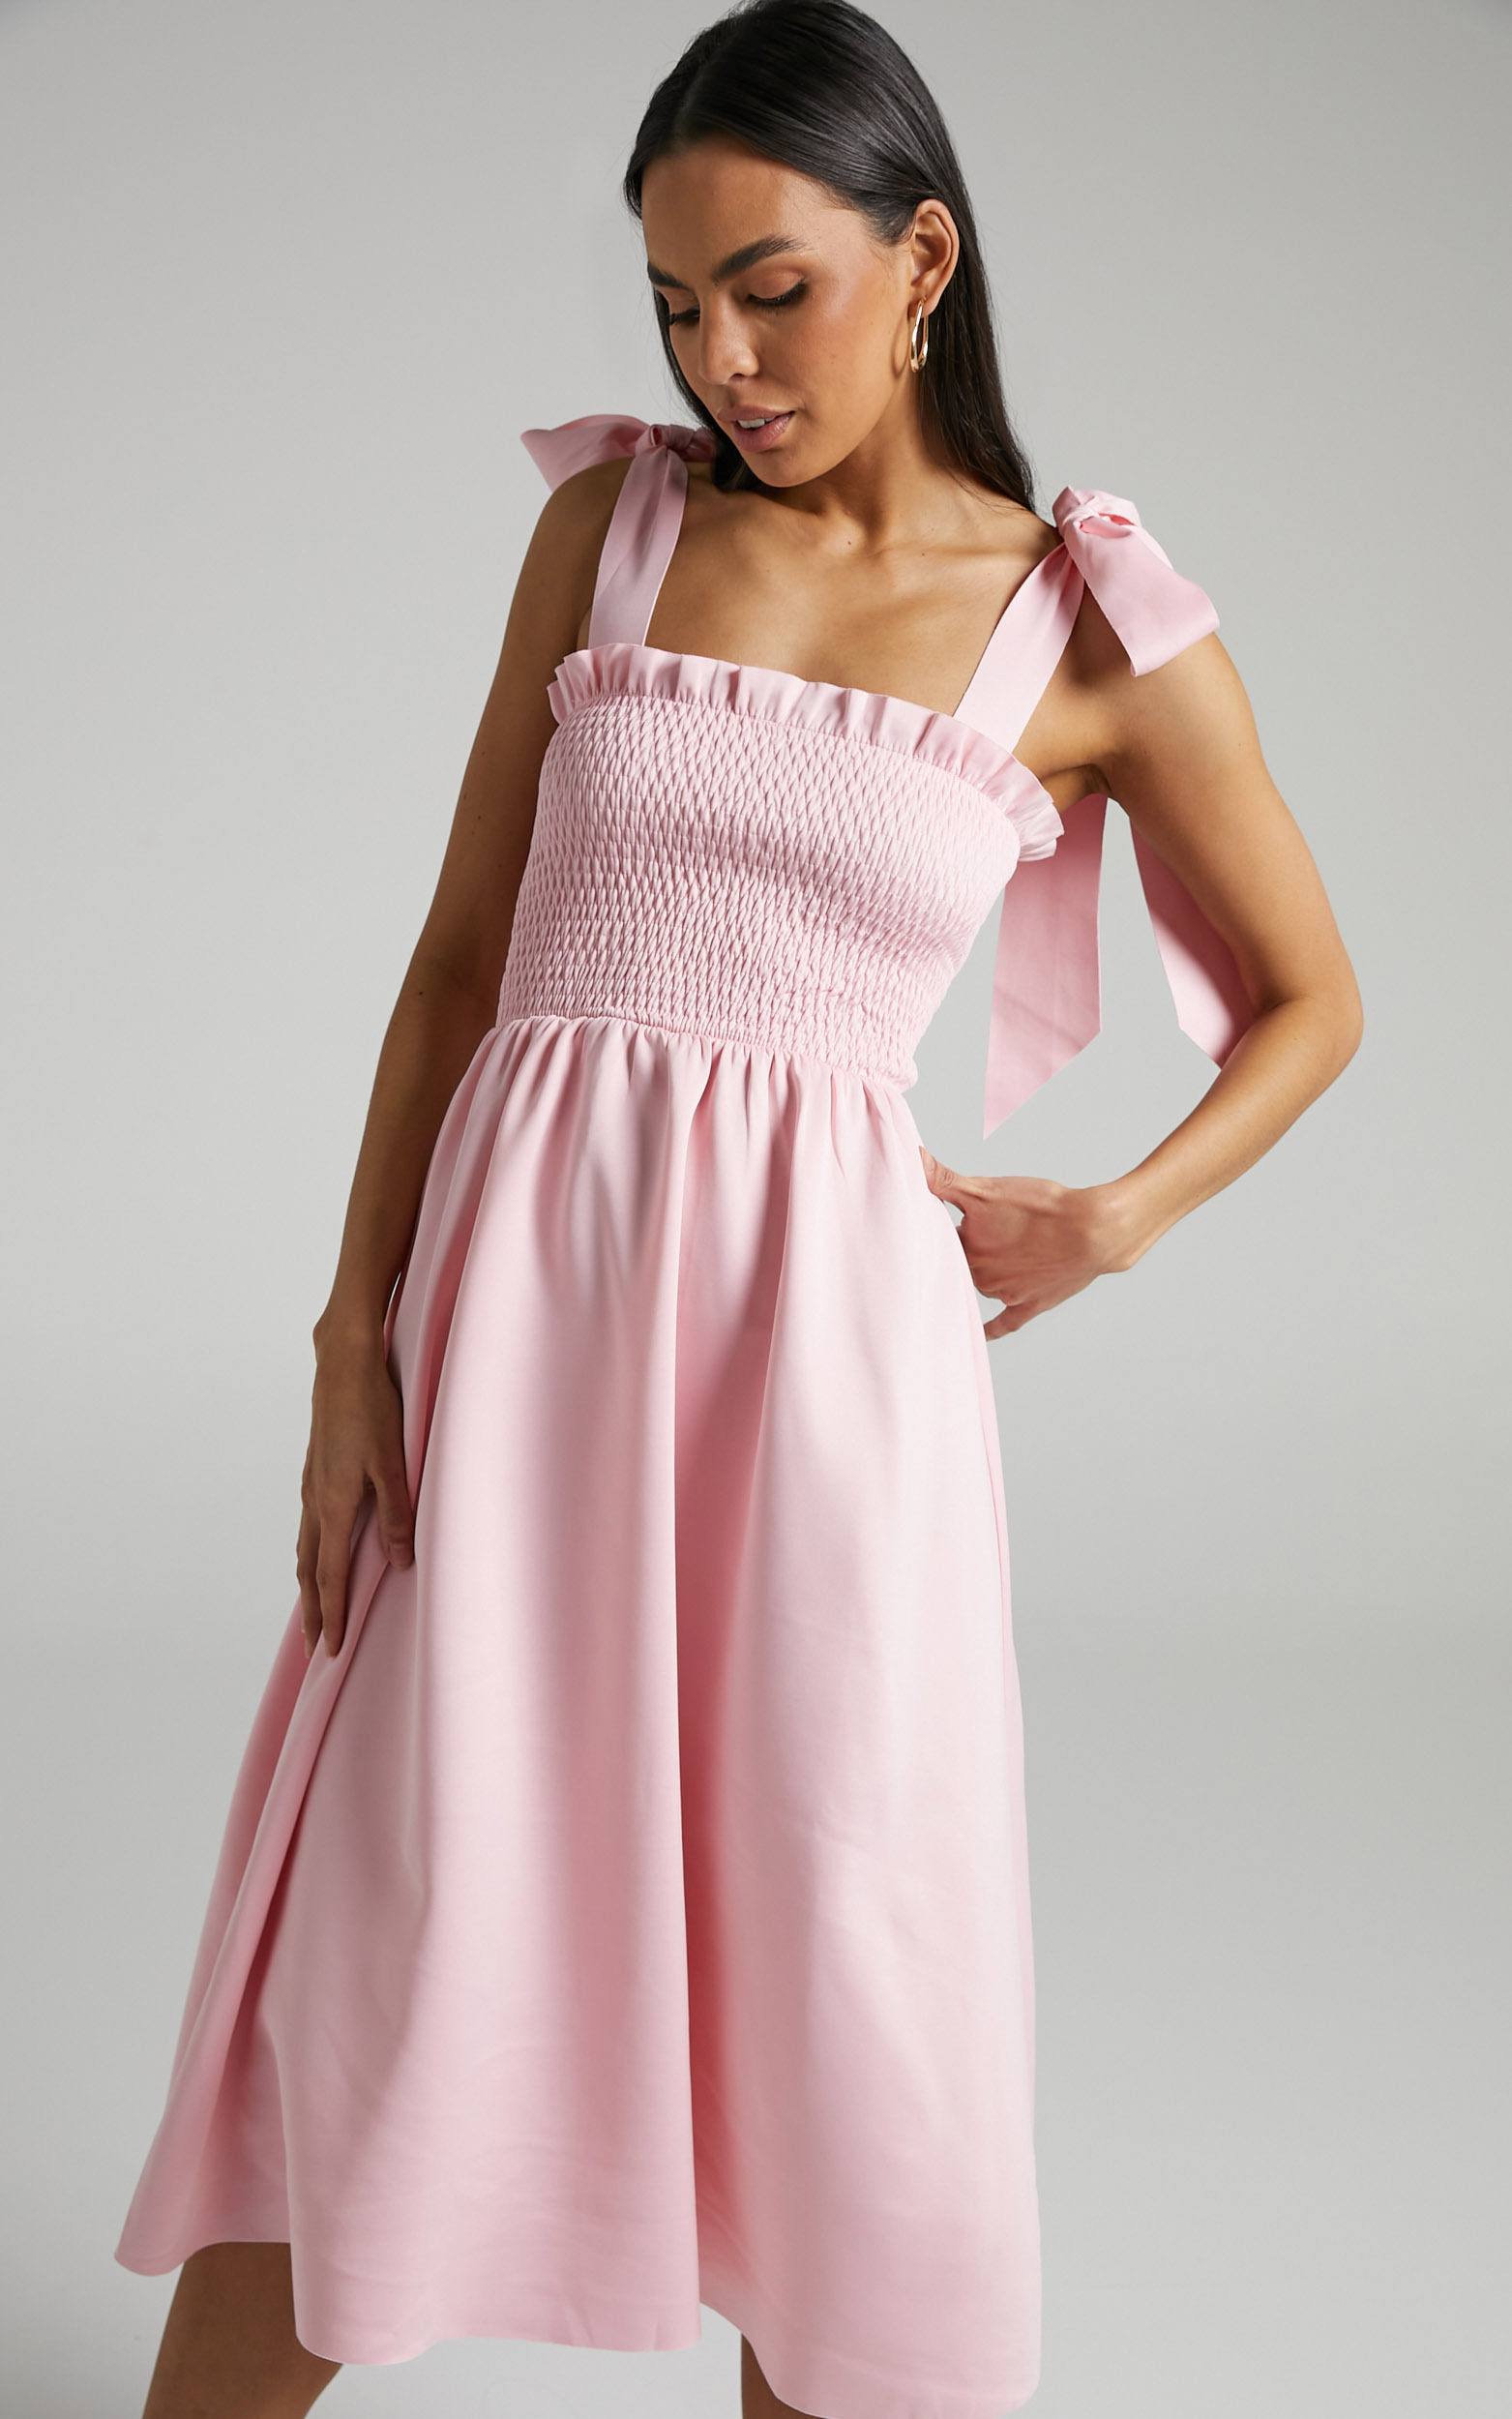 Erzsebet Shirred Bodice Tie Strap Midi Dress in Pale Pink - 06, PNK1, hi-res image number null